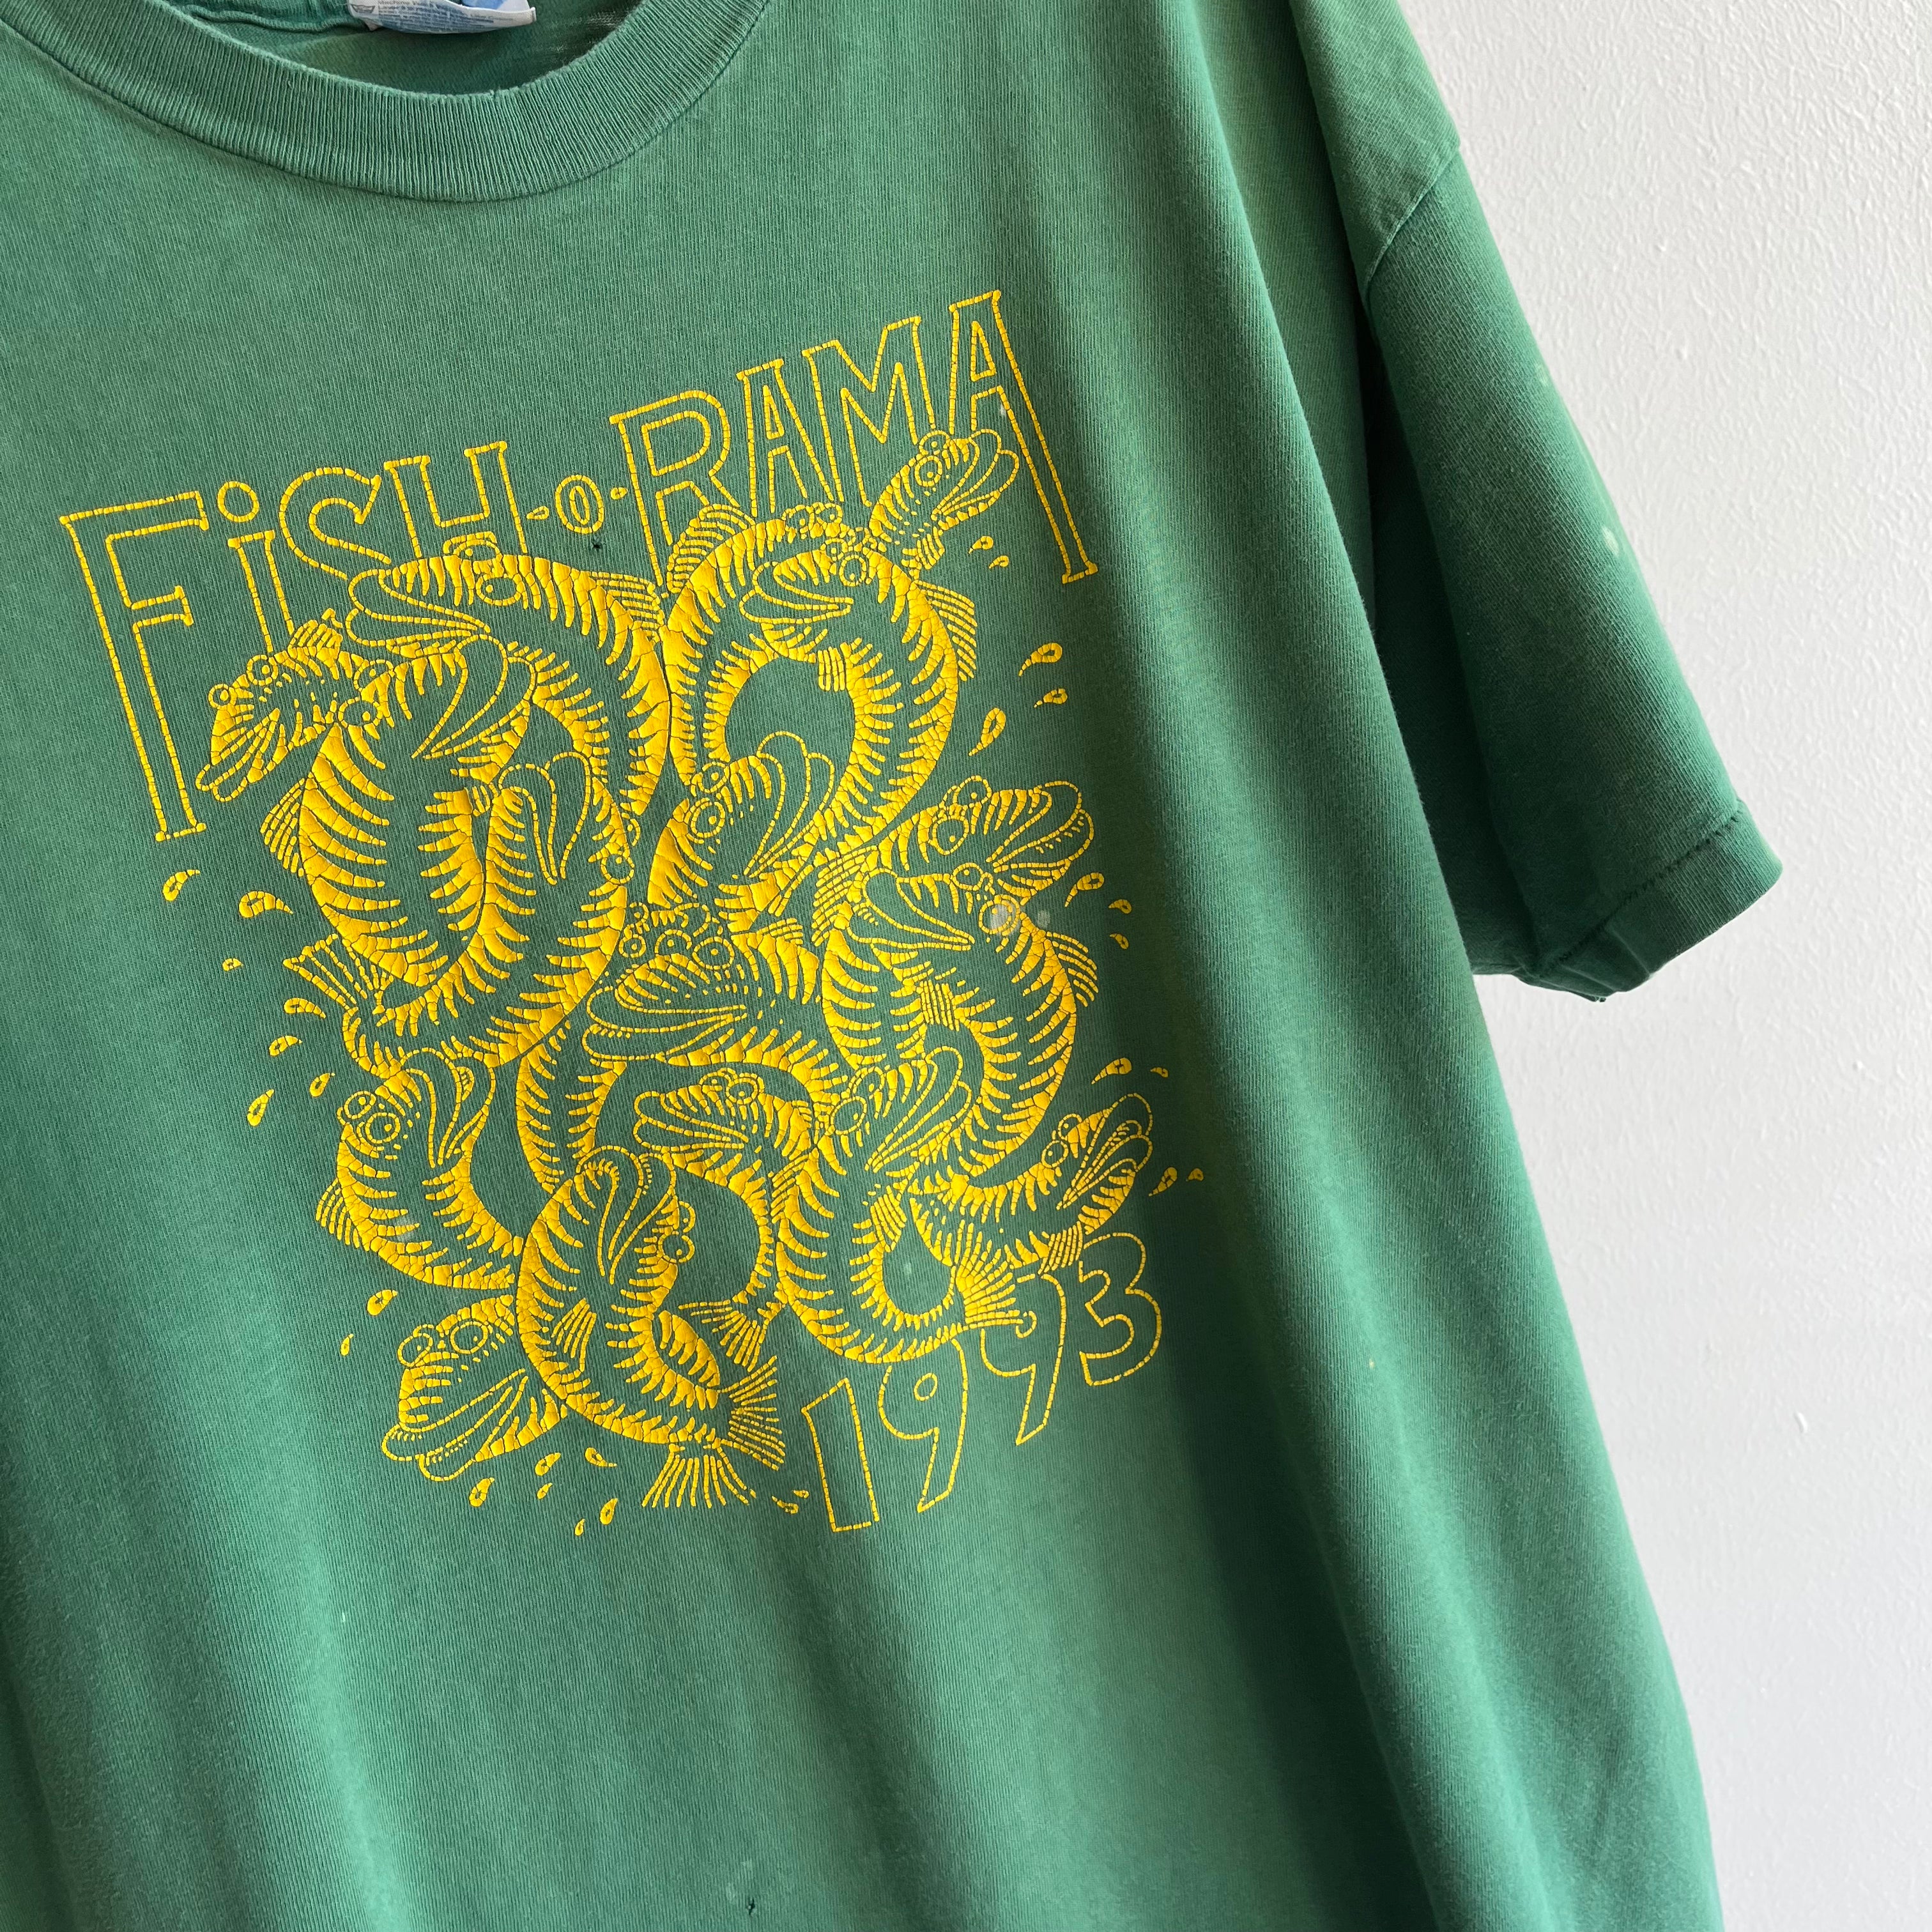 1993 Fish-o-rama T-Shirt